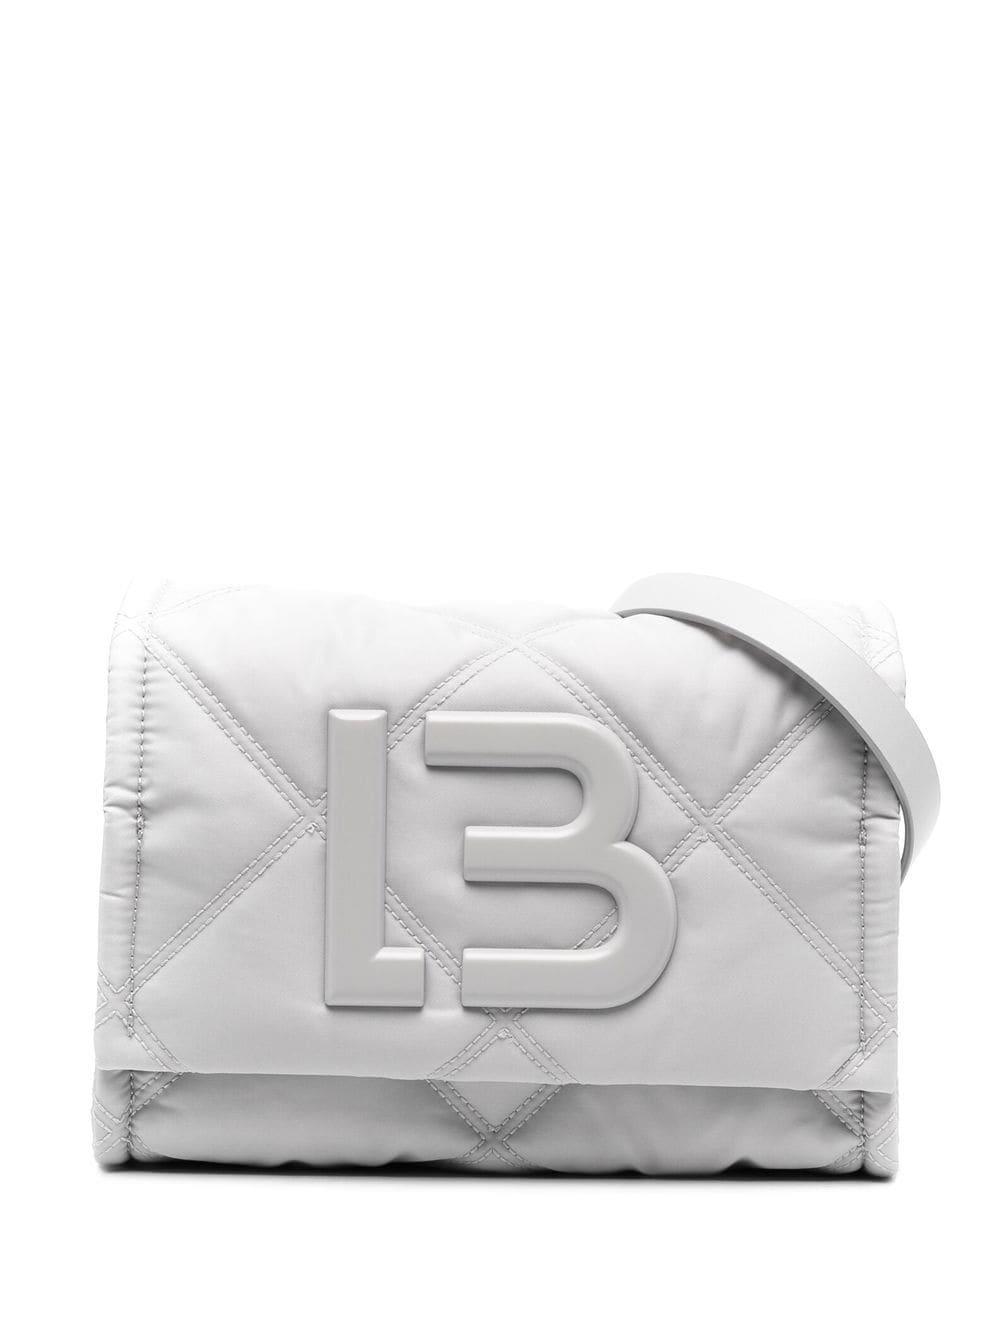 Bimba y Lola logo-strap Shoulder Bag - Farfetch